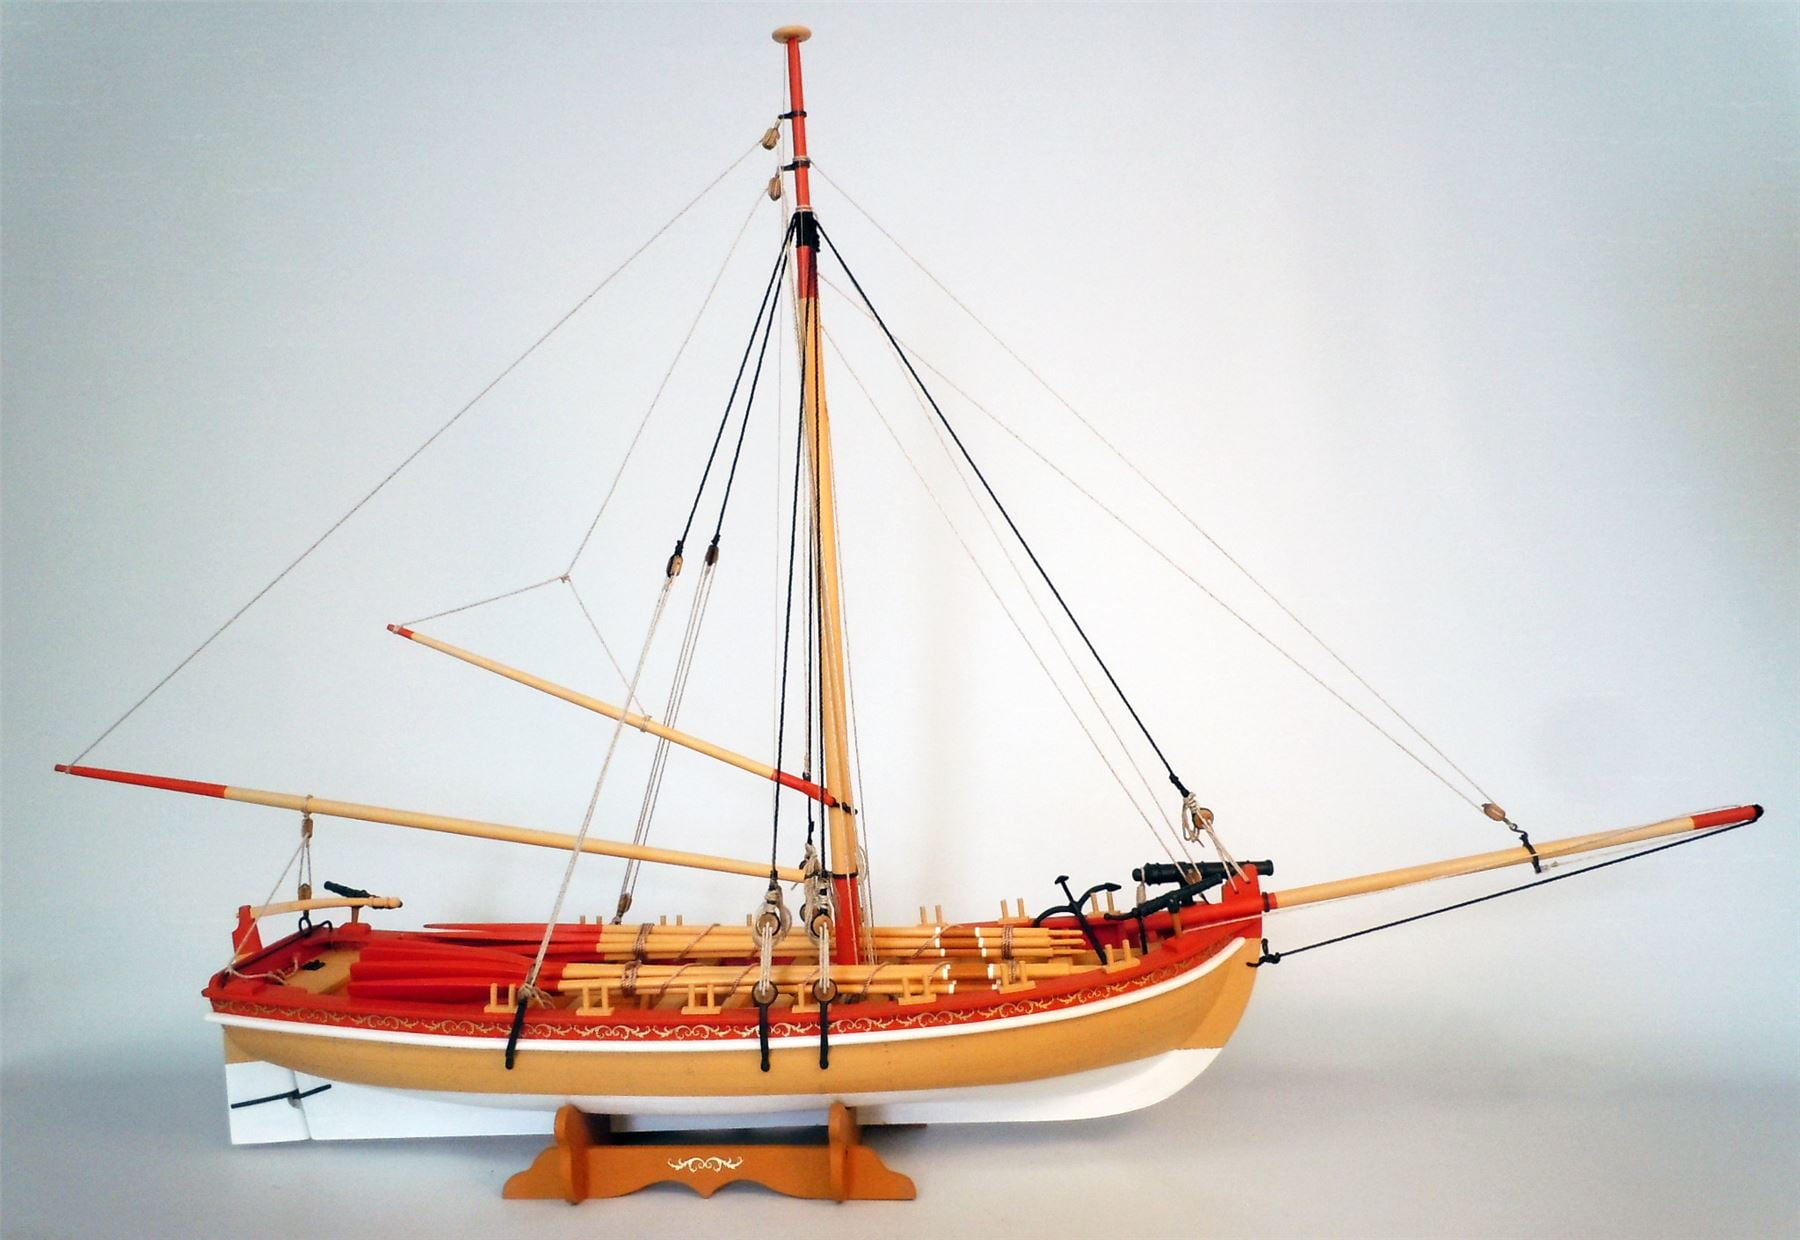 MODEL SHIPWAYS WOOD-PLANKED LONGBOAT KIT W/TOOLS & GLUE PAINTS ONLY $99.99 